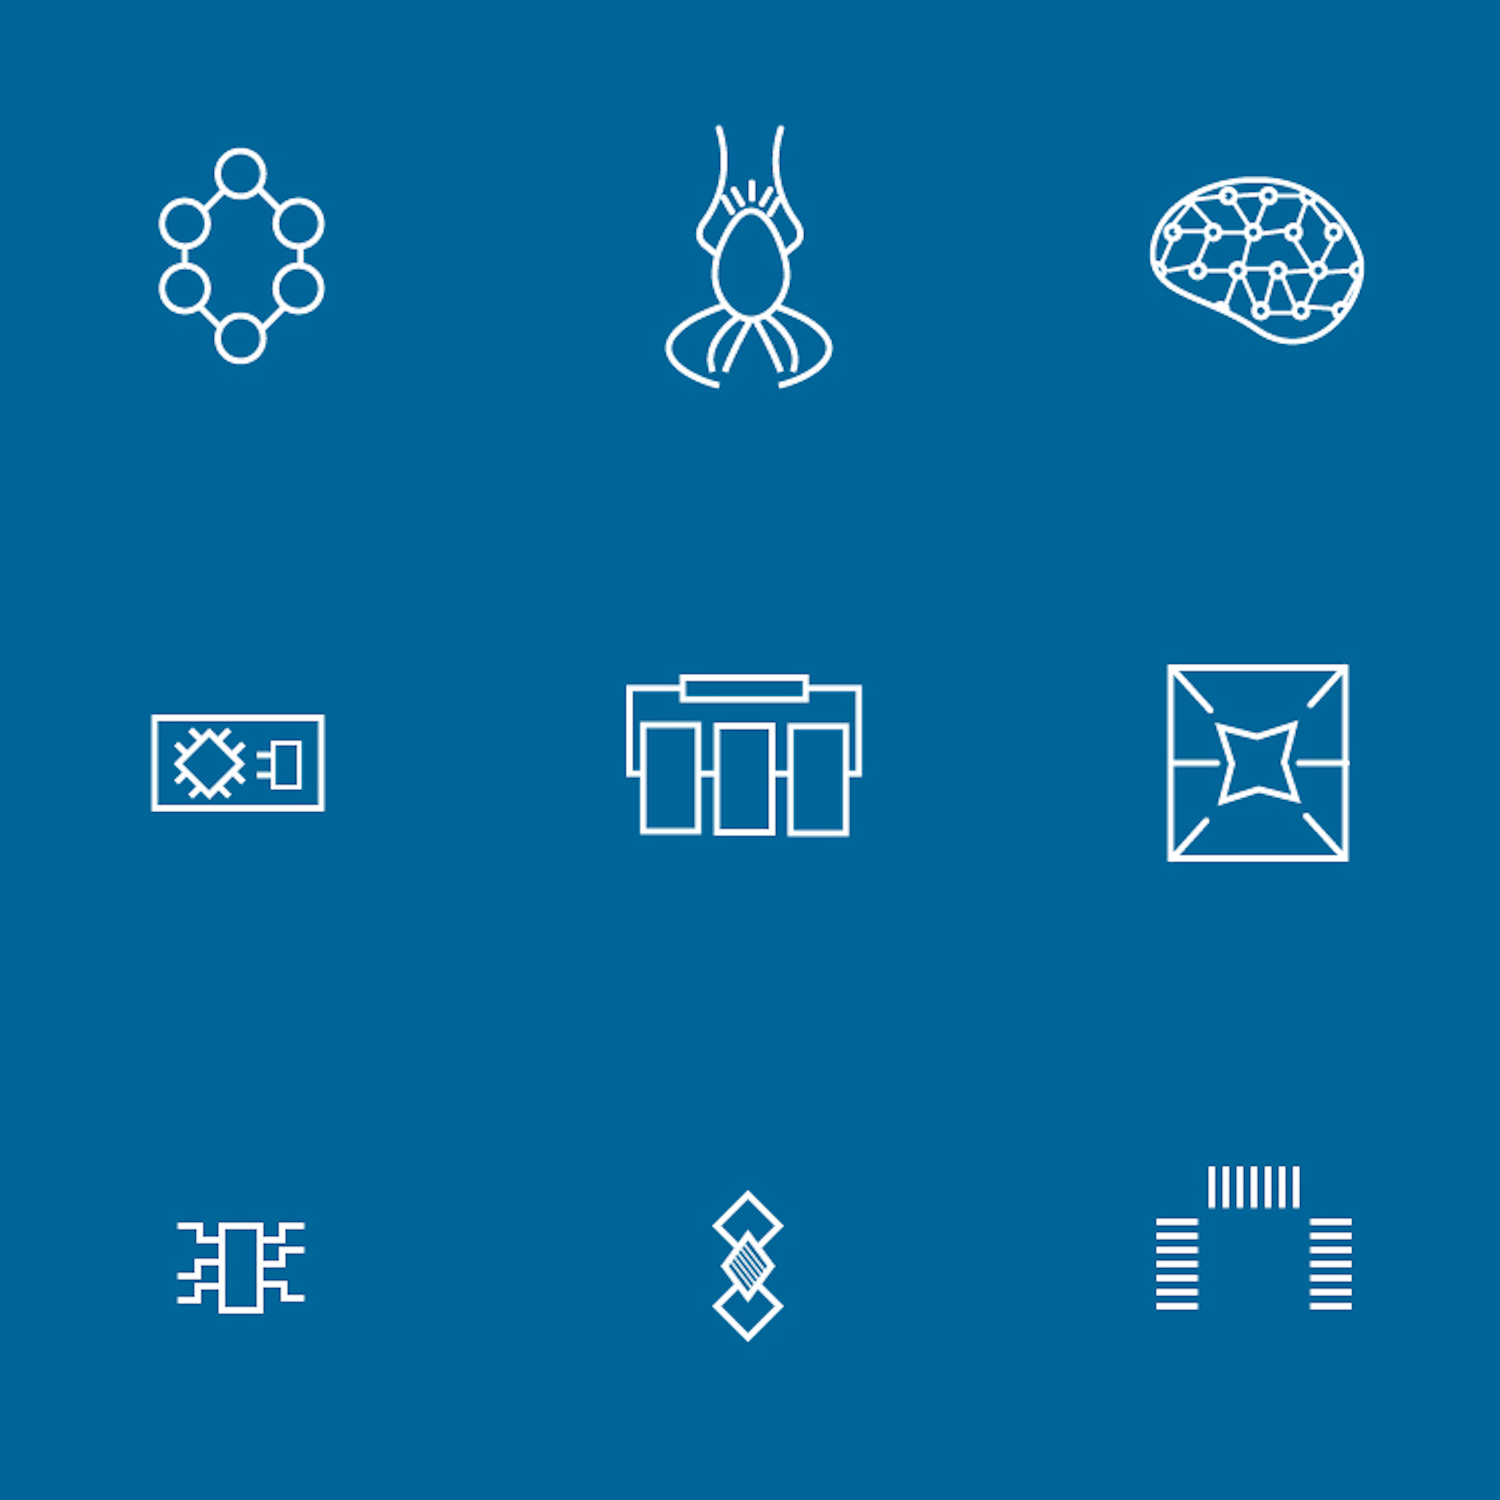 Nano Technology Icons cover image.